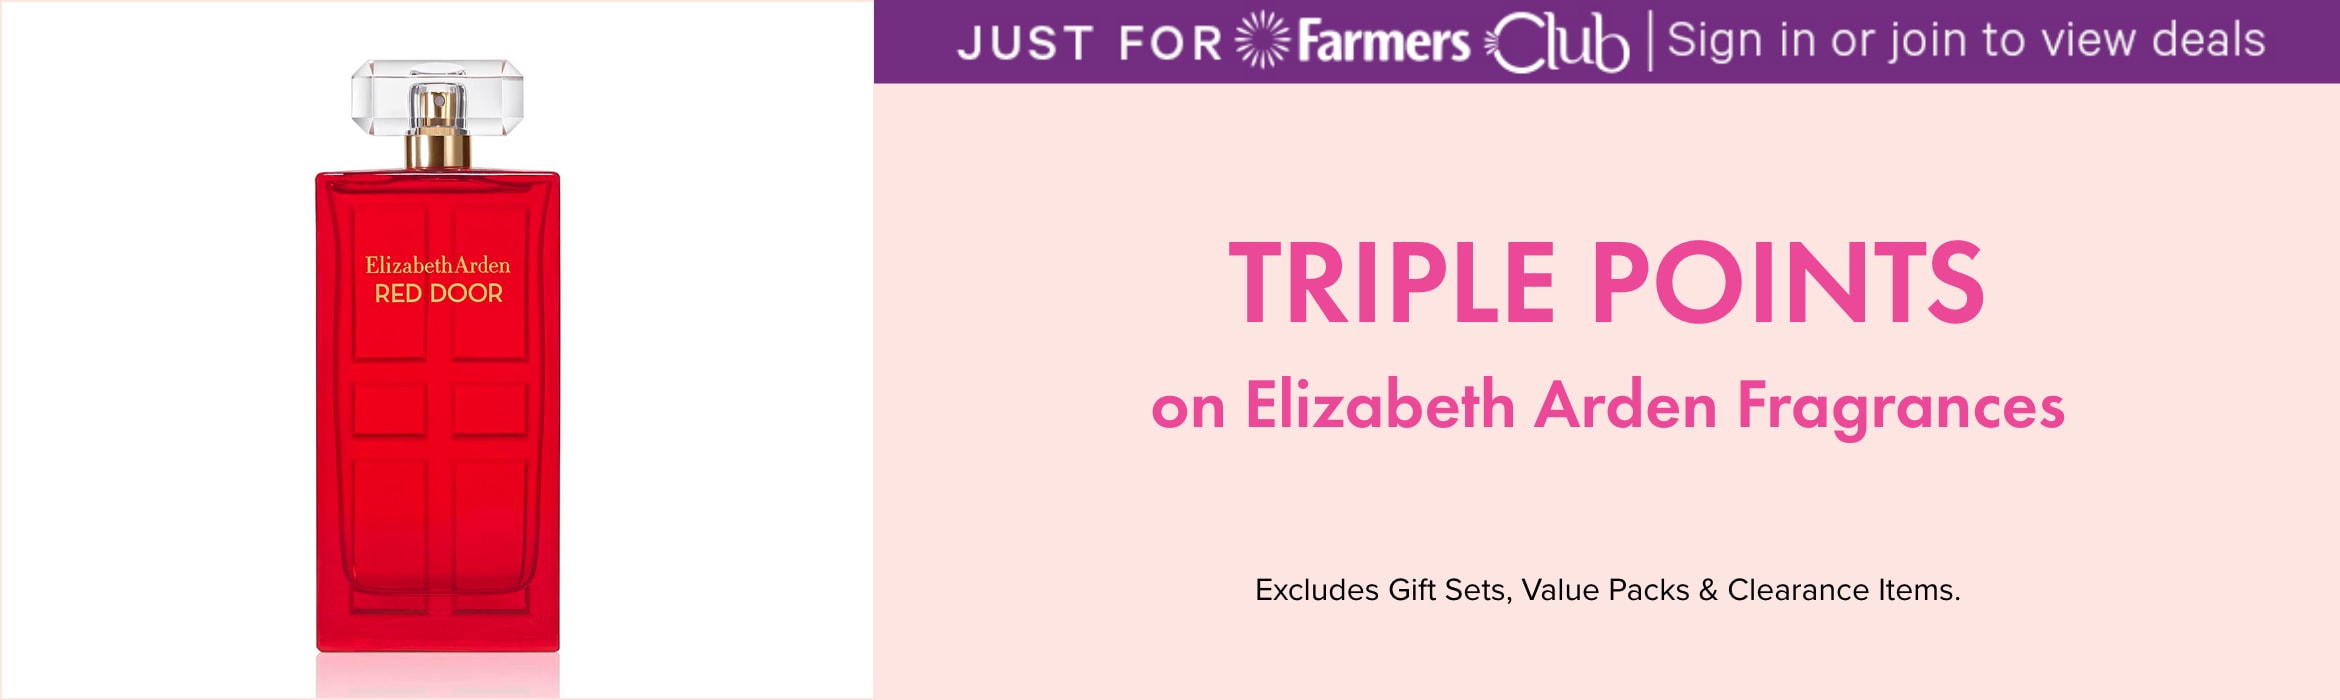 TRIPLE POINTS on Elizabeth Arden Fragrance 